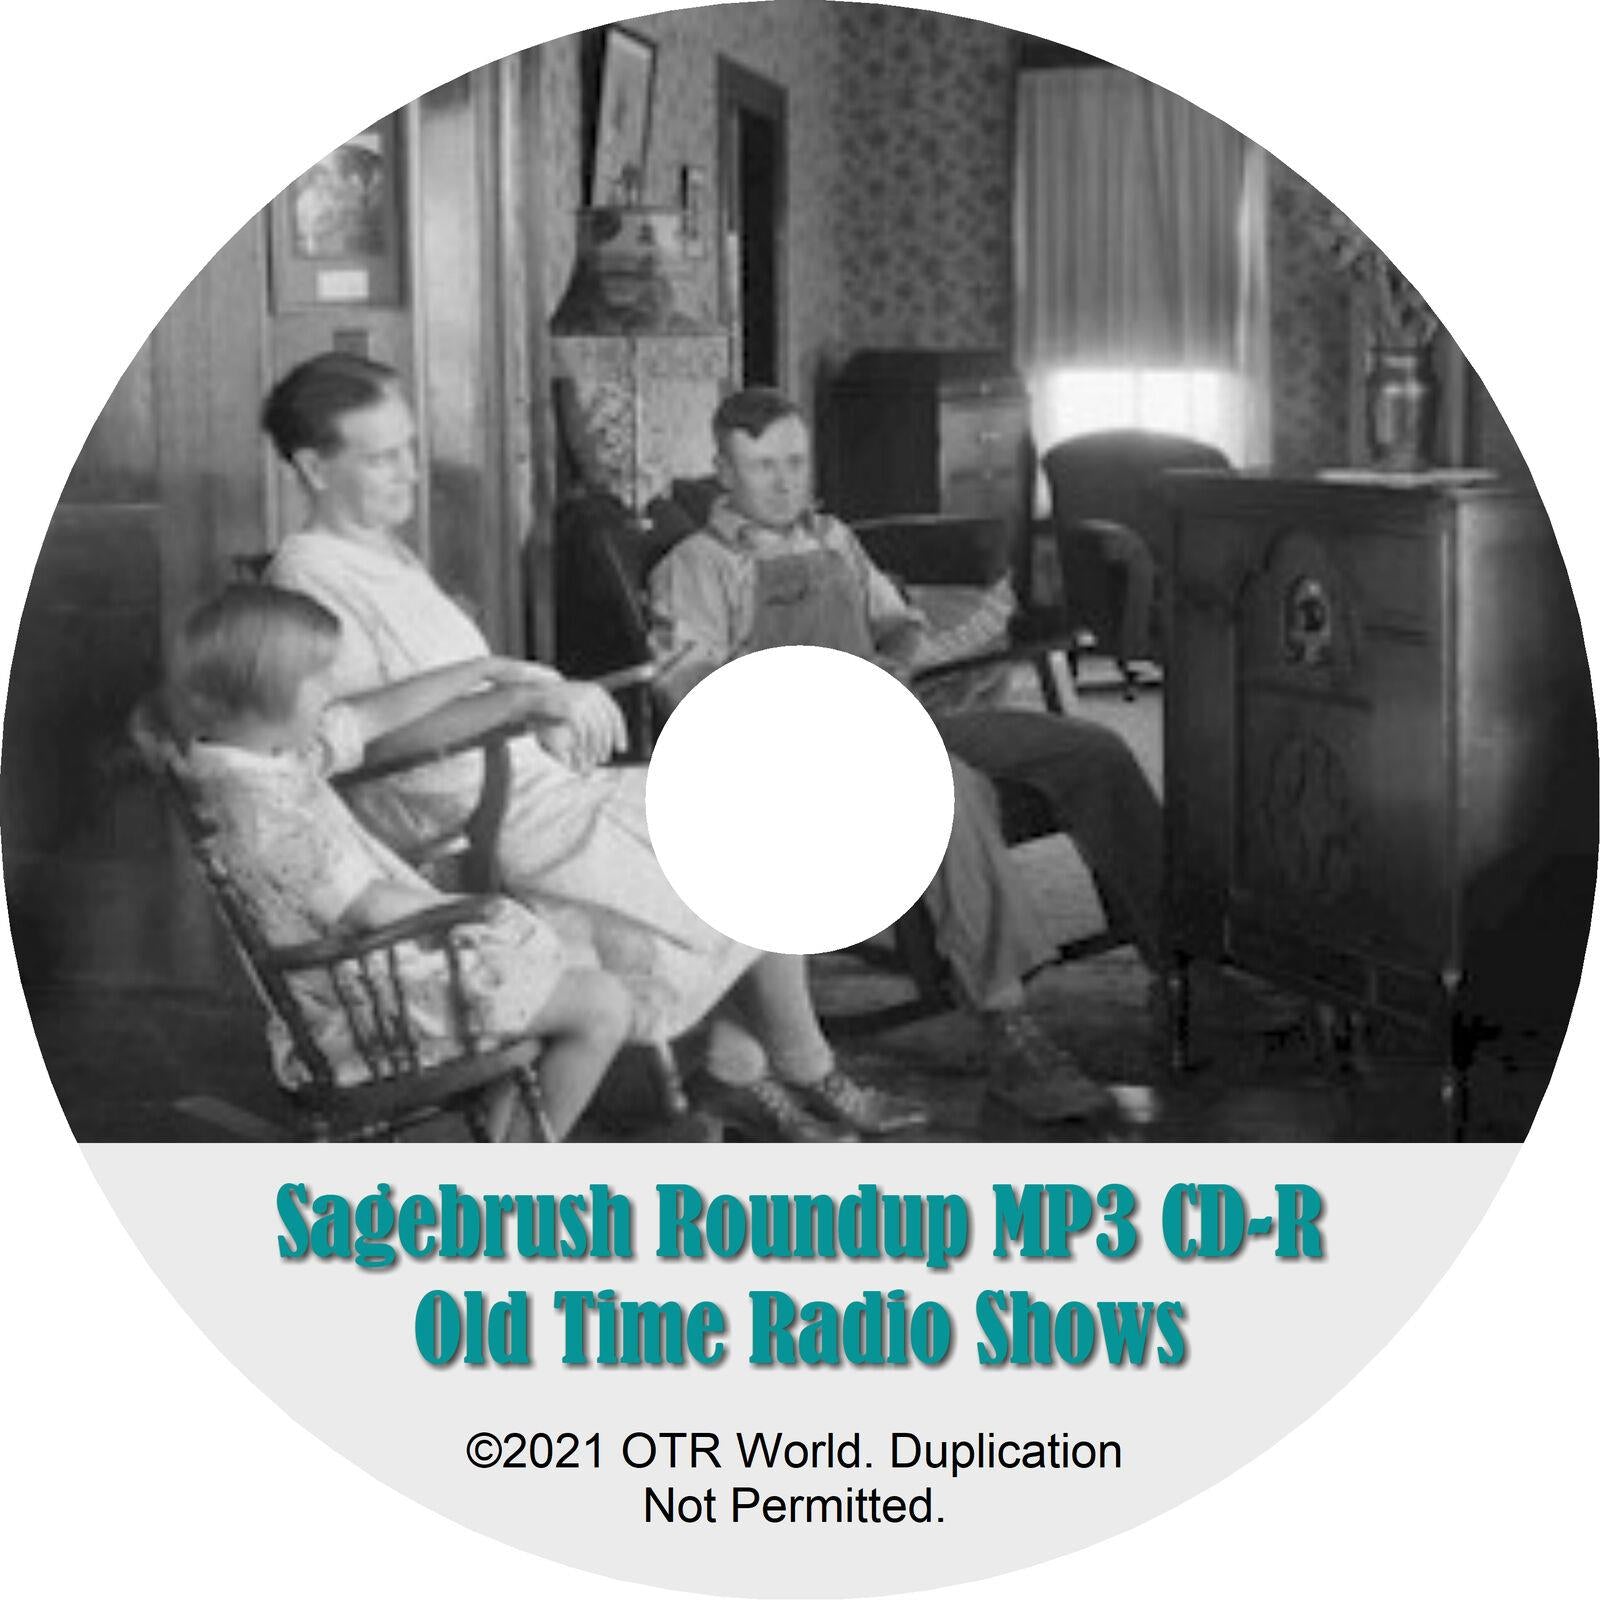 Sagebrush Roundup OTR OTRS Old Time Radio Shows MP3 On CD-R 6 Episodes